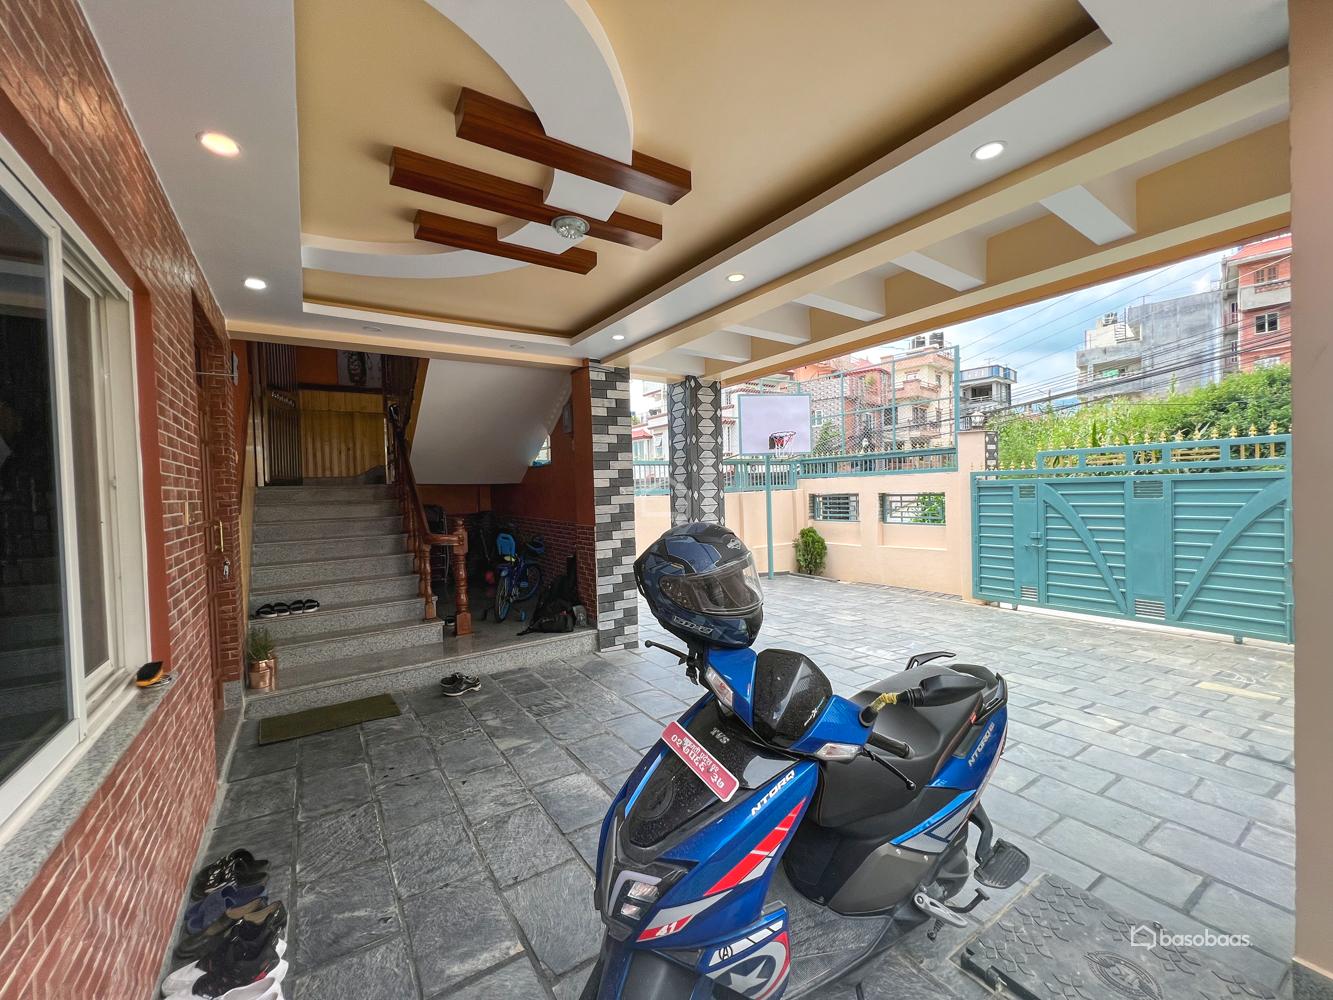 NEWLY BUILT RESIDENTIAL : House for Sale in Dhapasi, Kathmandu Image 1